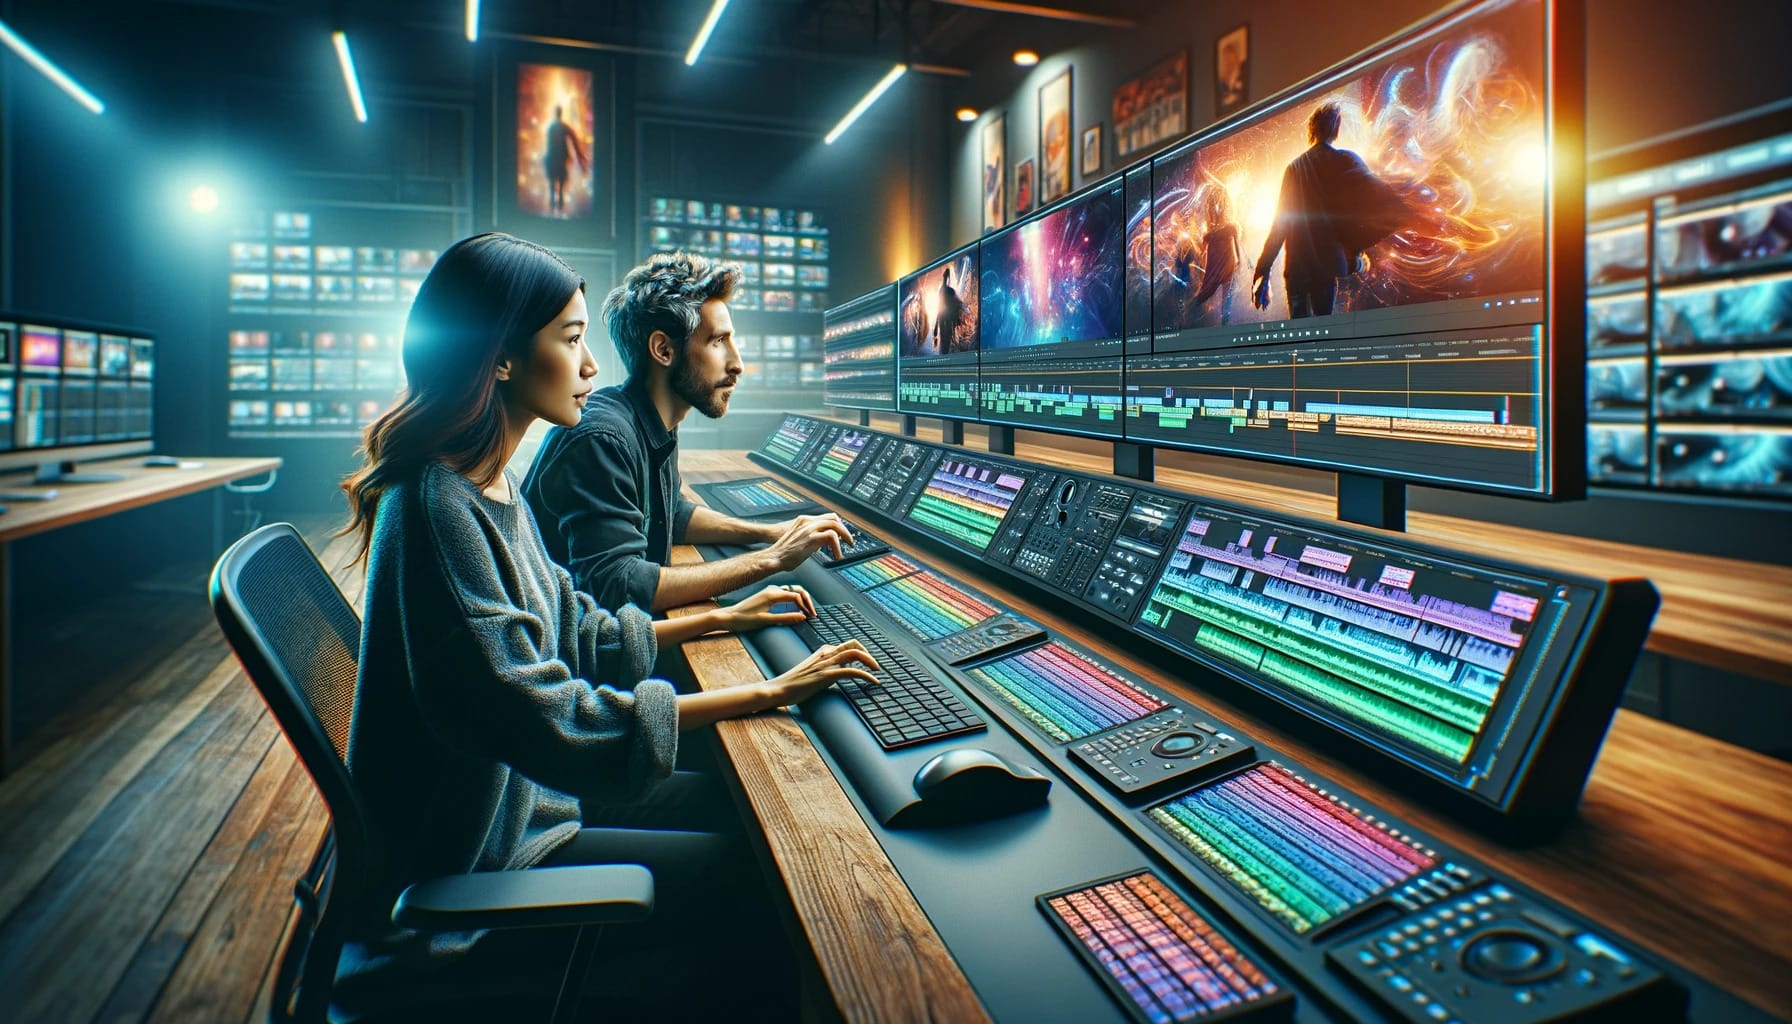 A man and a woman in a futuristic video editing studio